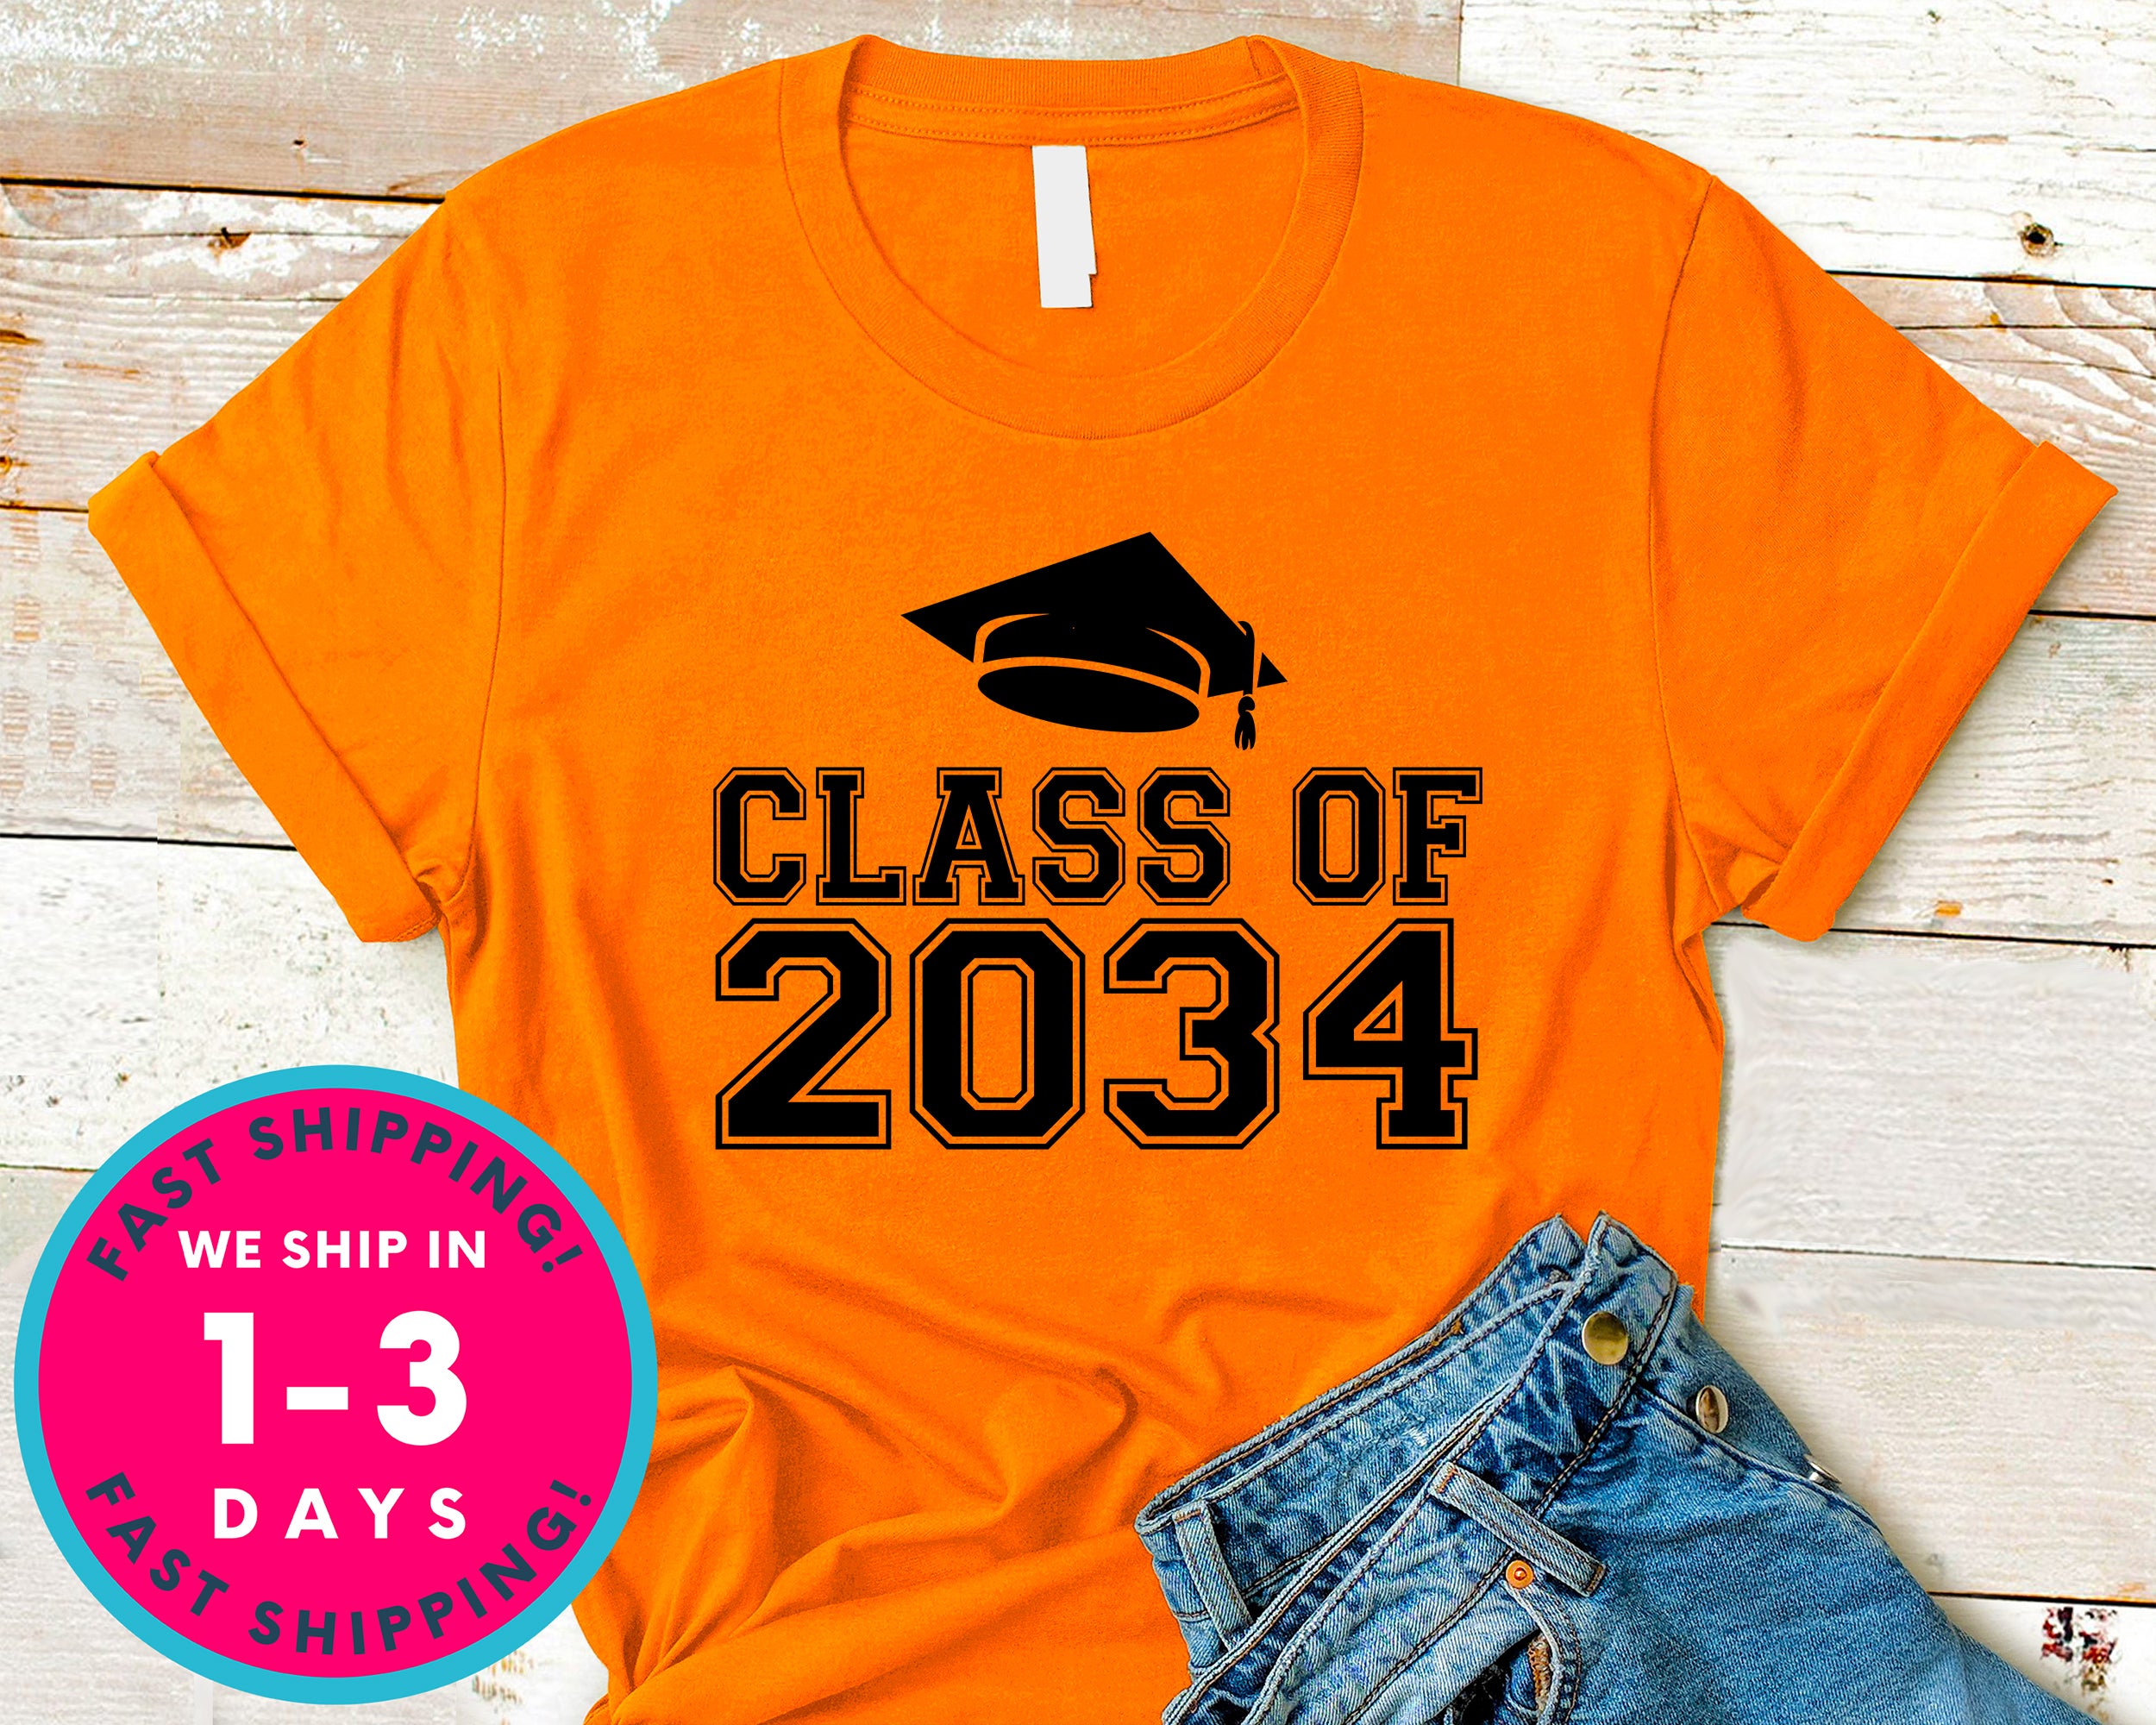 Class Of 2034 T-Shirt - Back To School College Shirt